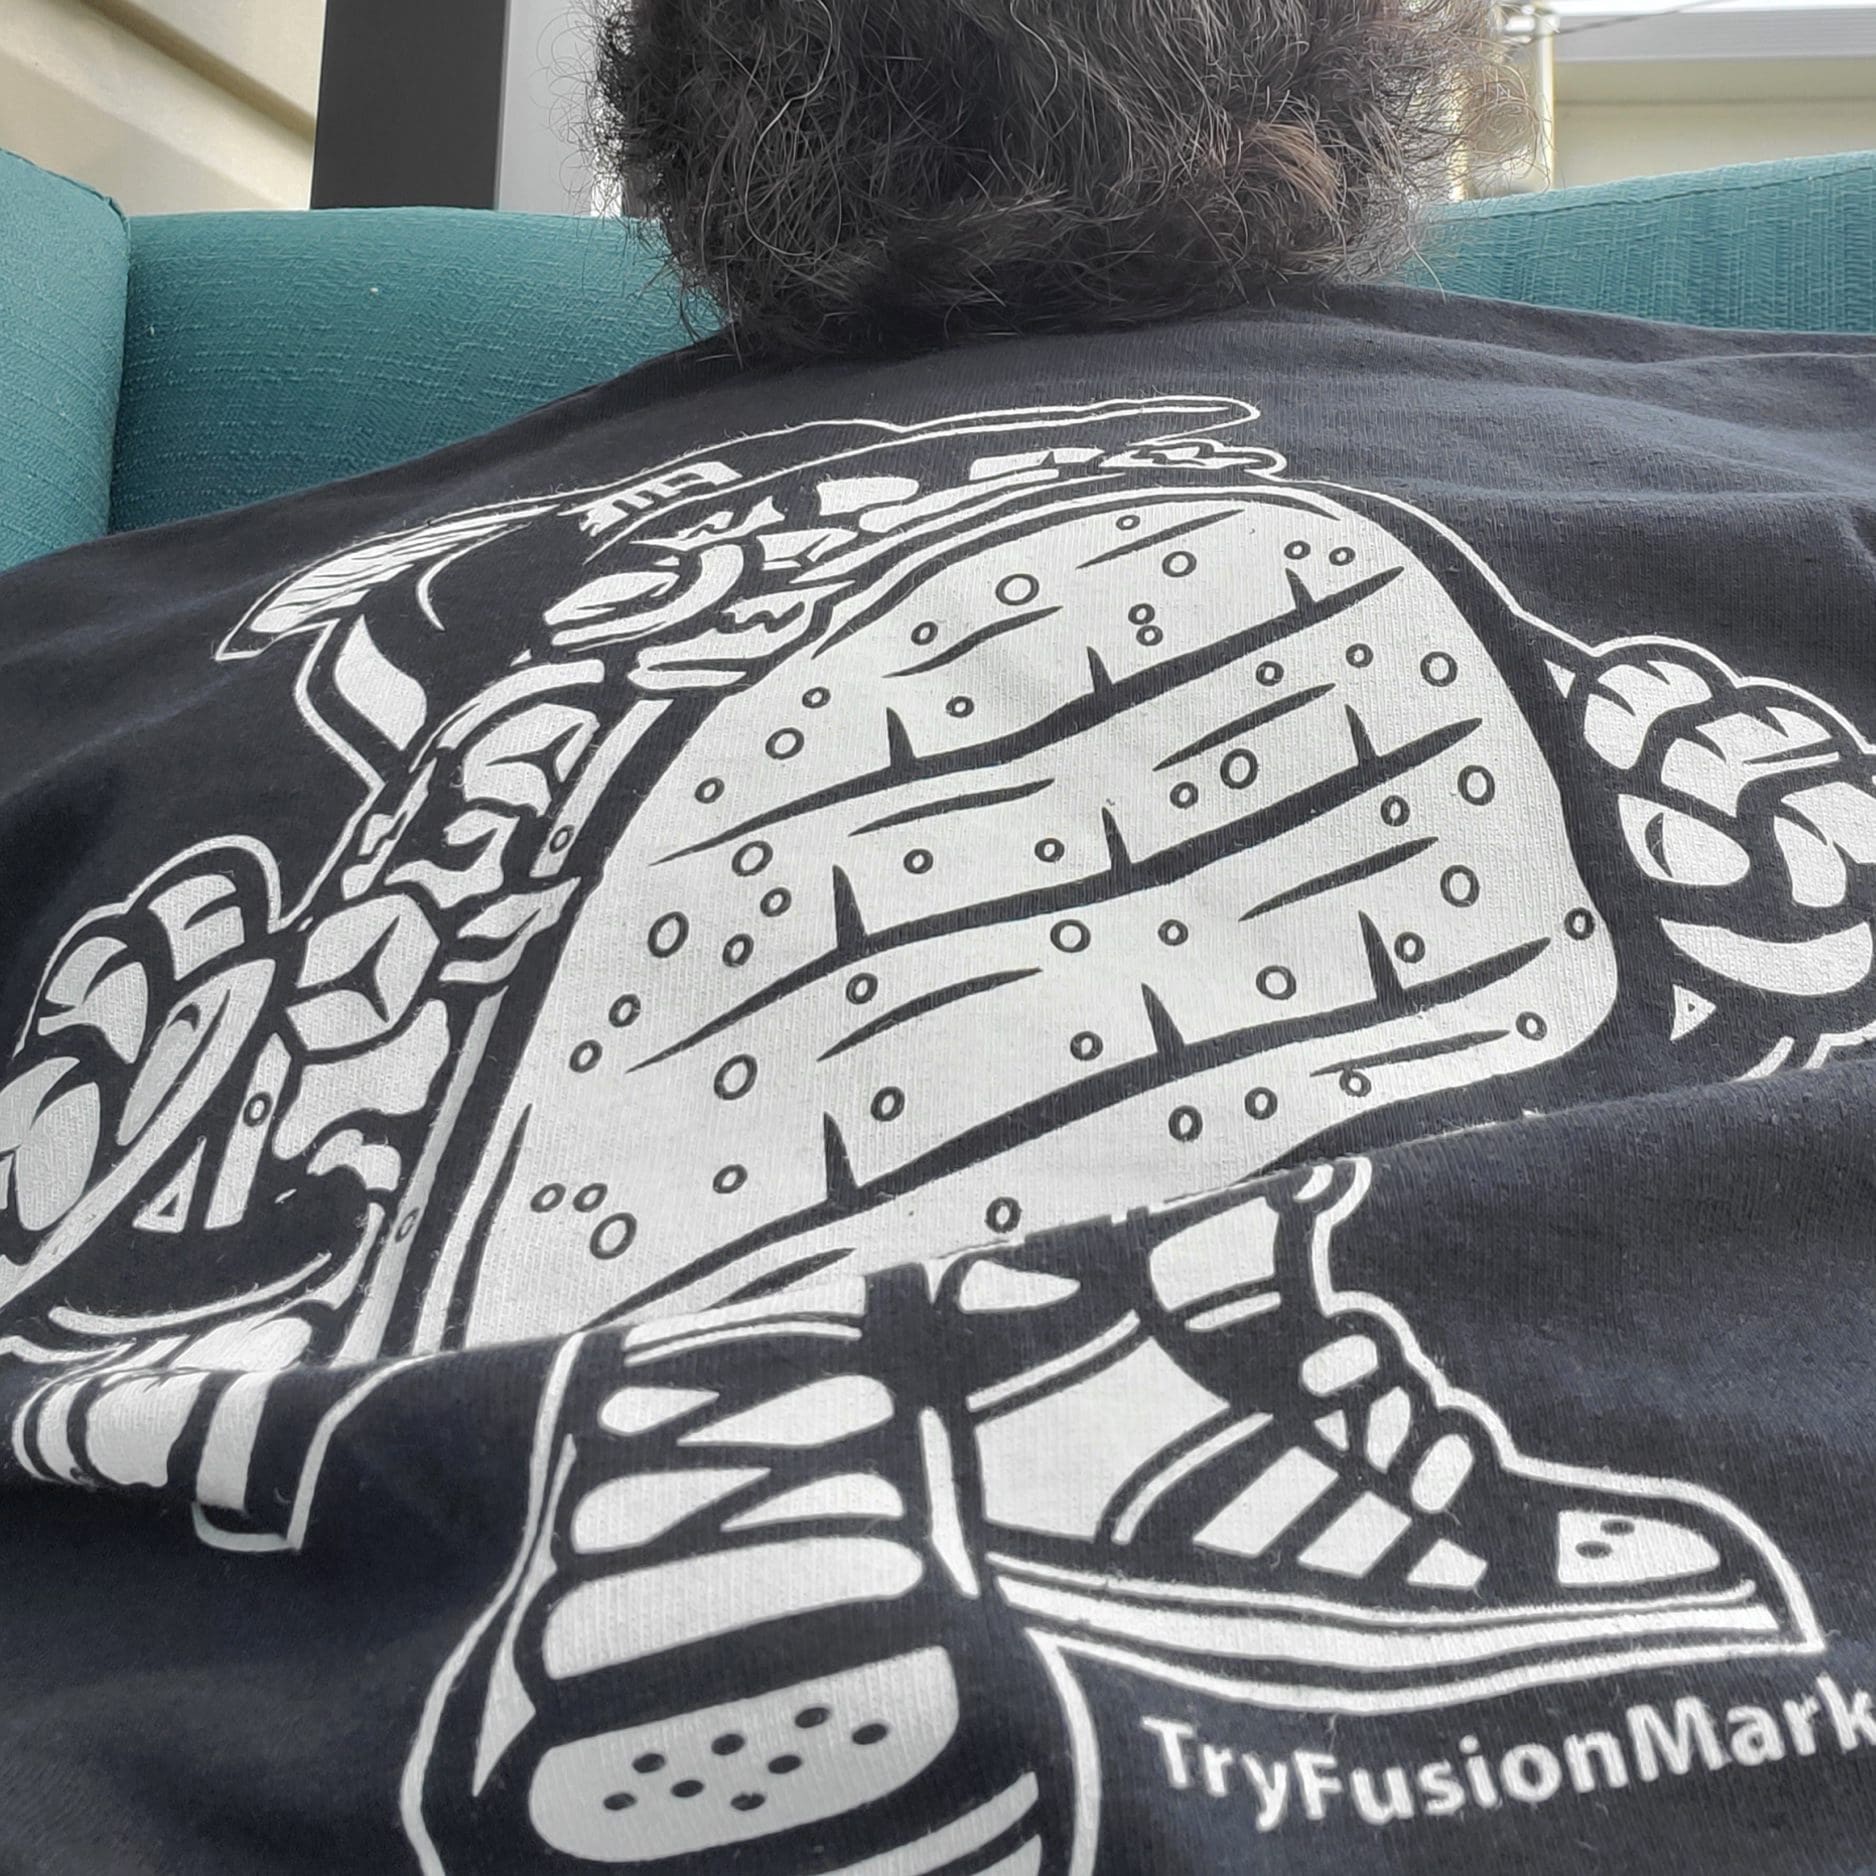 Fusion Marketing - Detroit Baseball Taco T-Shirt 02